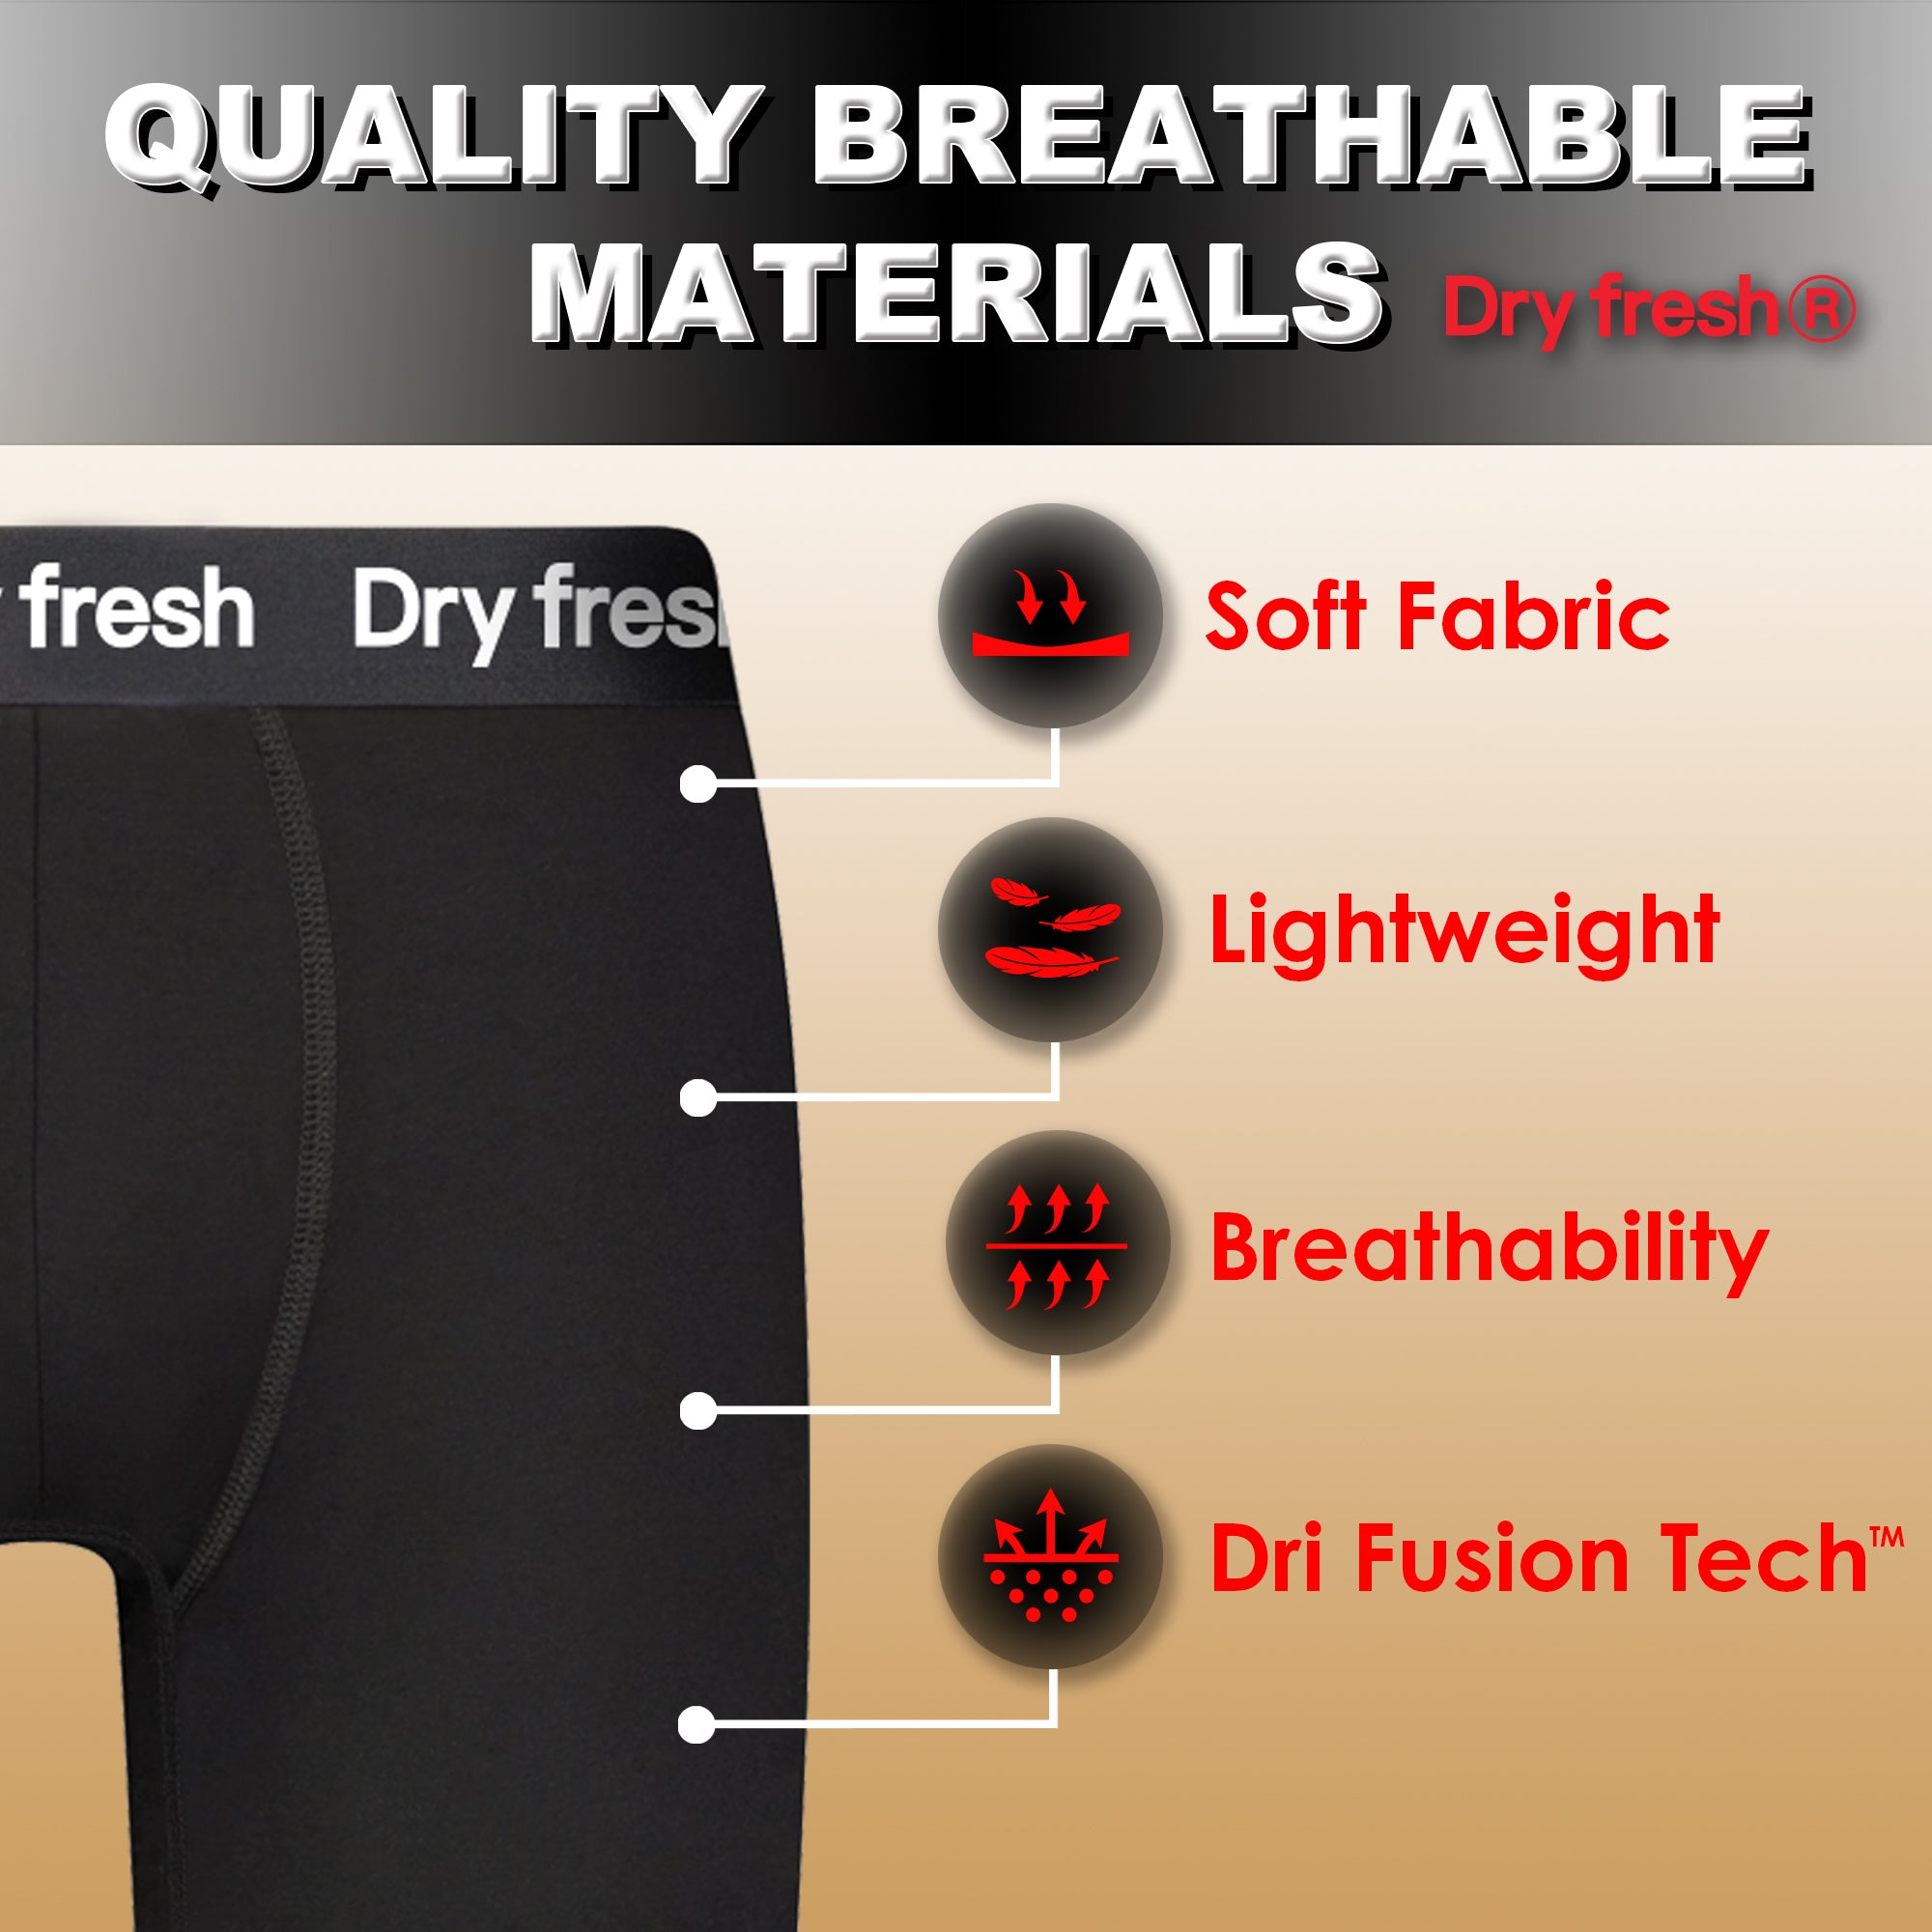 Dry fresh Performance Men’s Boxer Brief – 6 Pc Pack, Men’s Underwear Boxer Briefs, Soft & Comfortable Waistband, Anti-Chafing